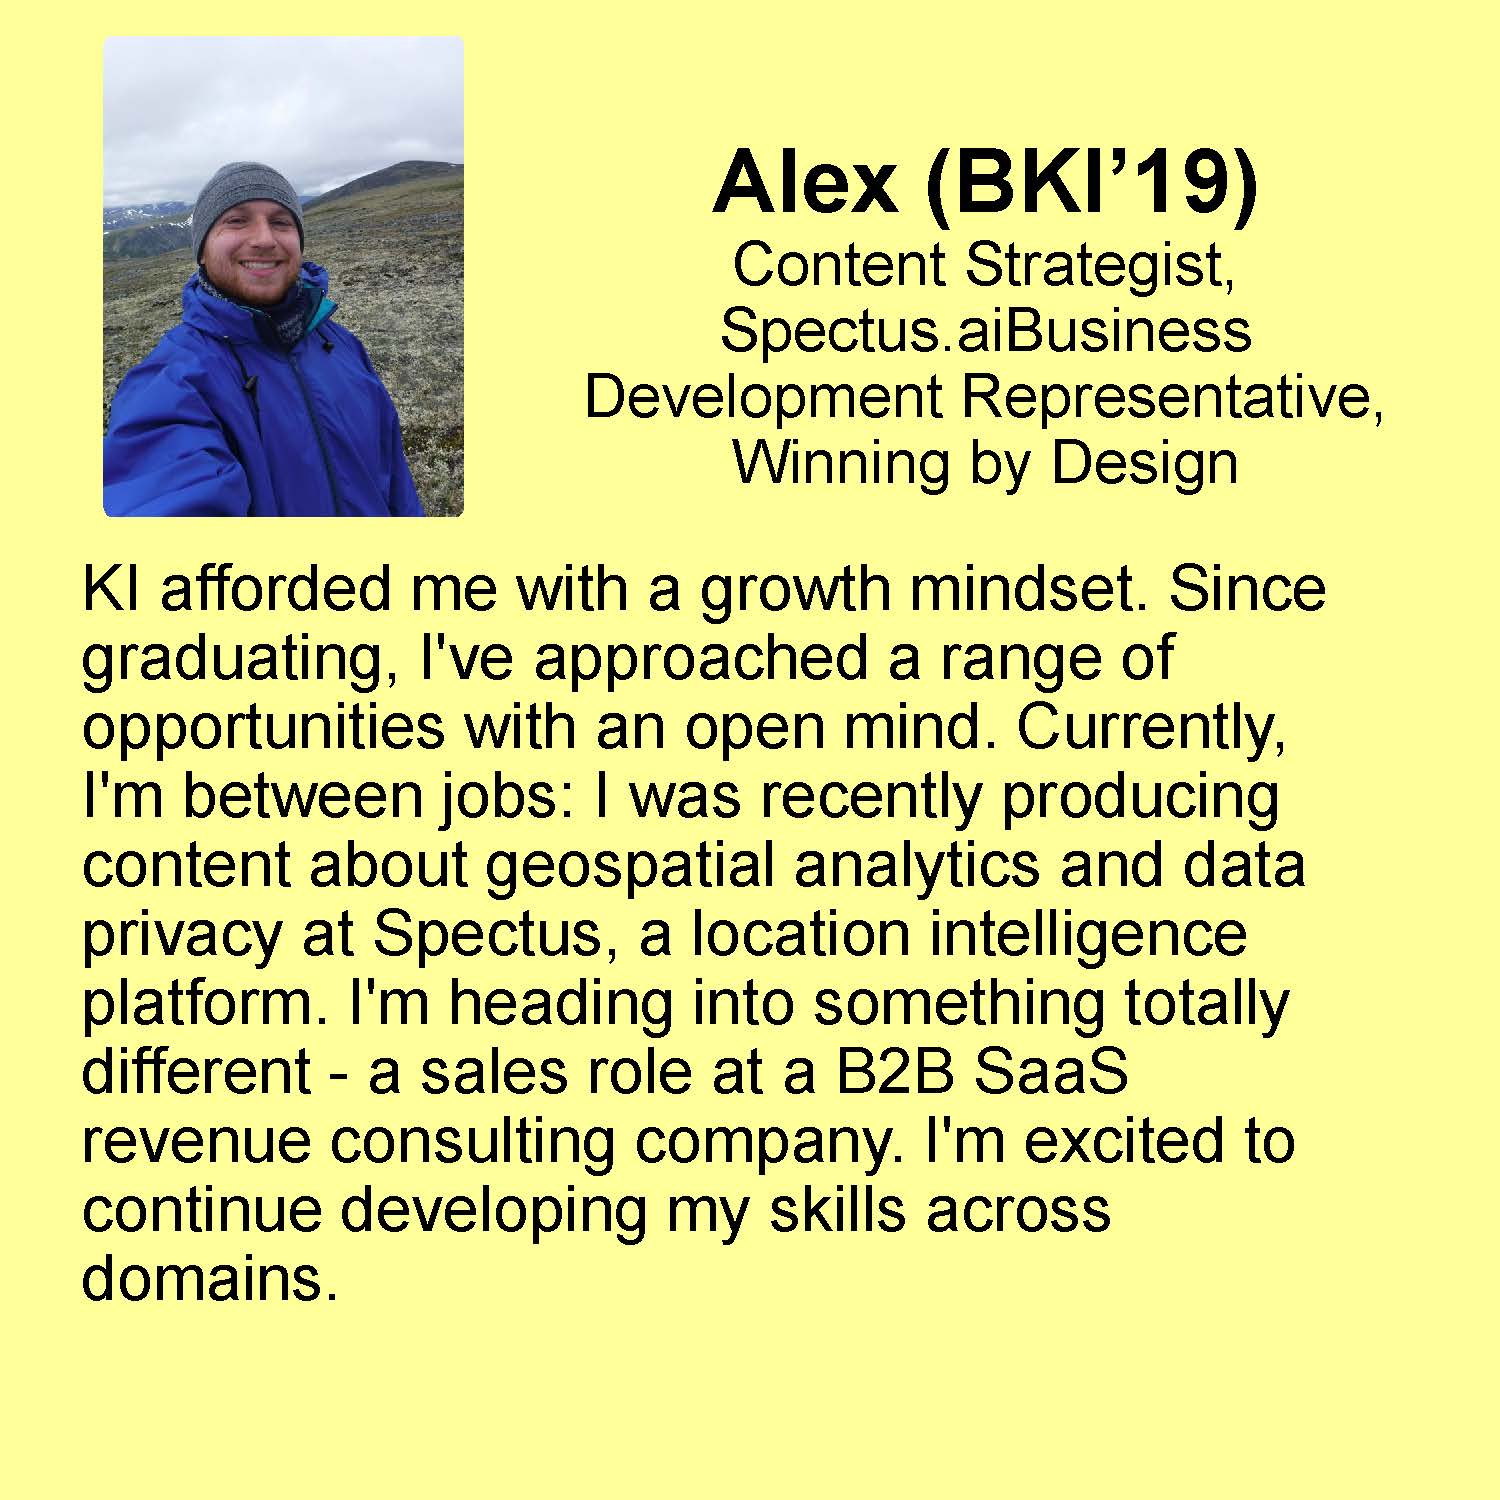 Alex profile Content Strategist - Spectus.aiBusiness Development Representative - Winning by Design